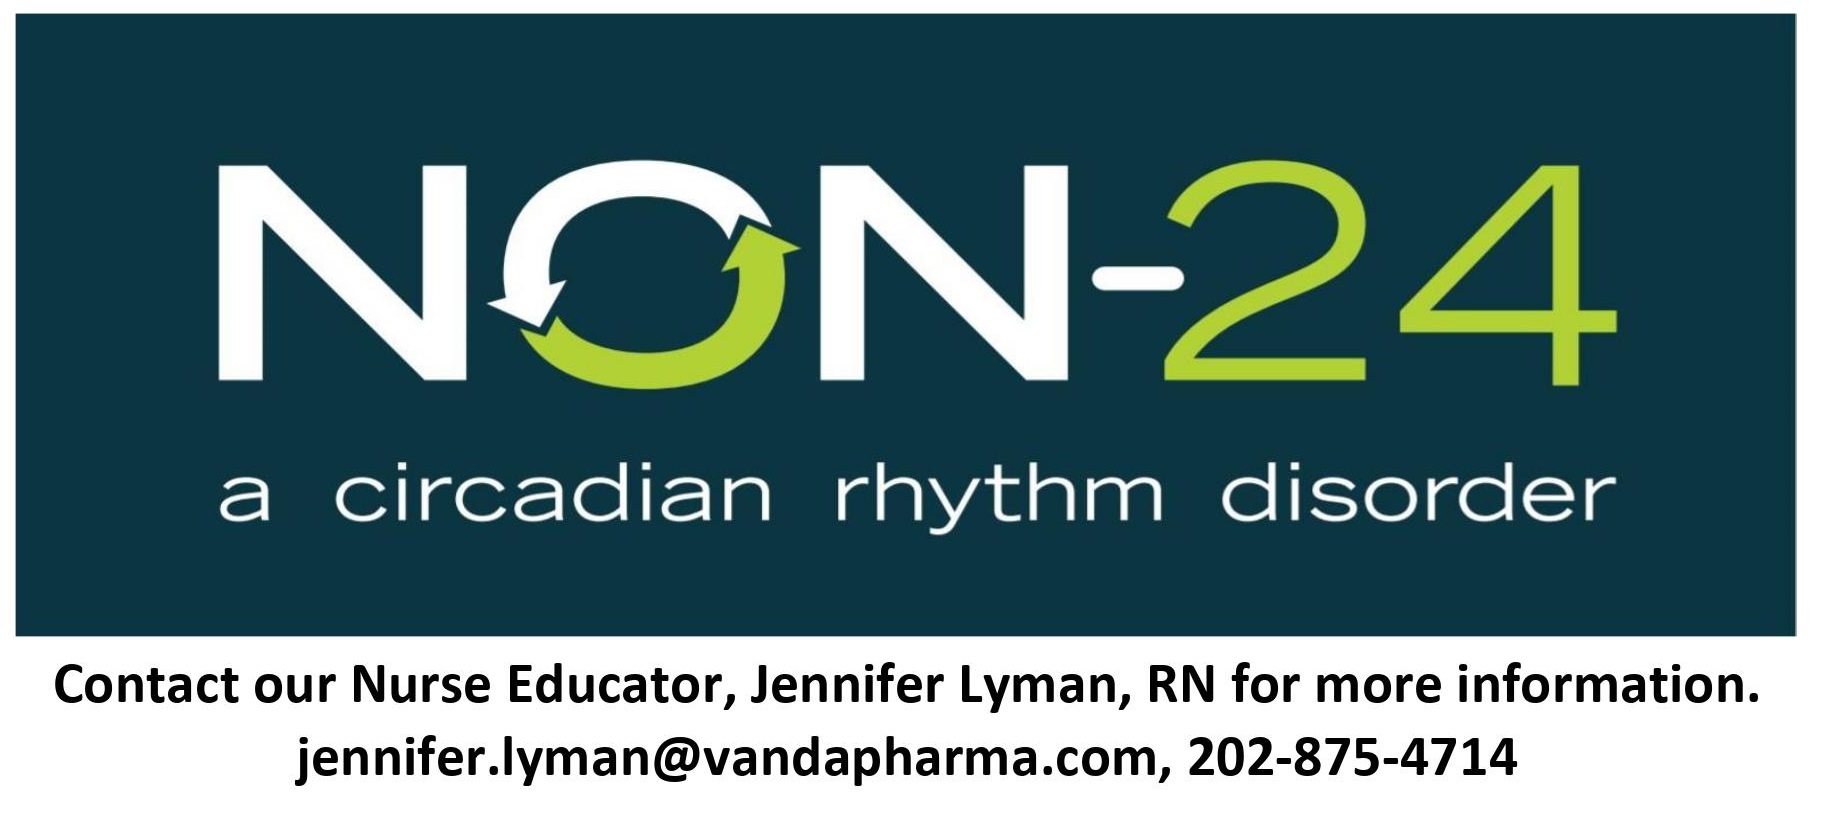 NON-24 Logo saying, "NON-24 a circadian rhythm disorder.  Contact our Nurse Educator, Jennifer Lyman, RN for more information. jennifer.lyman@vandaparma.com, 202-875-4714"